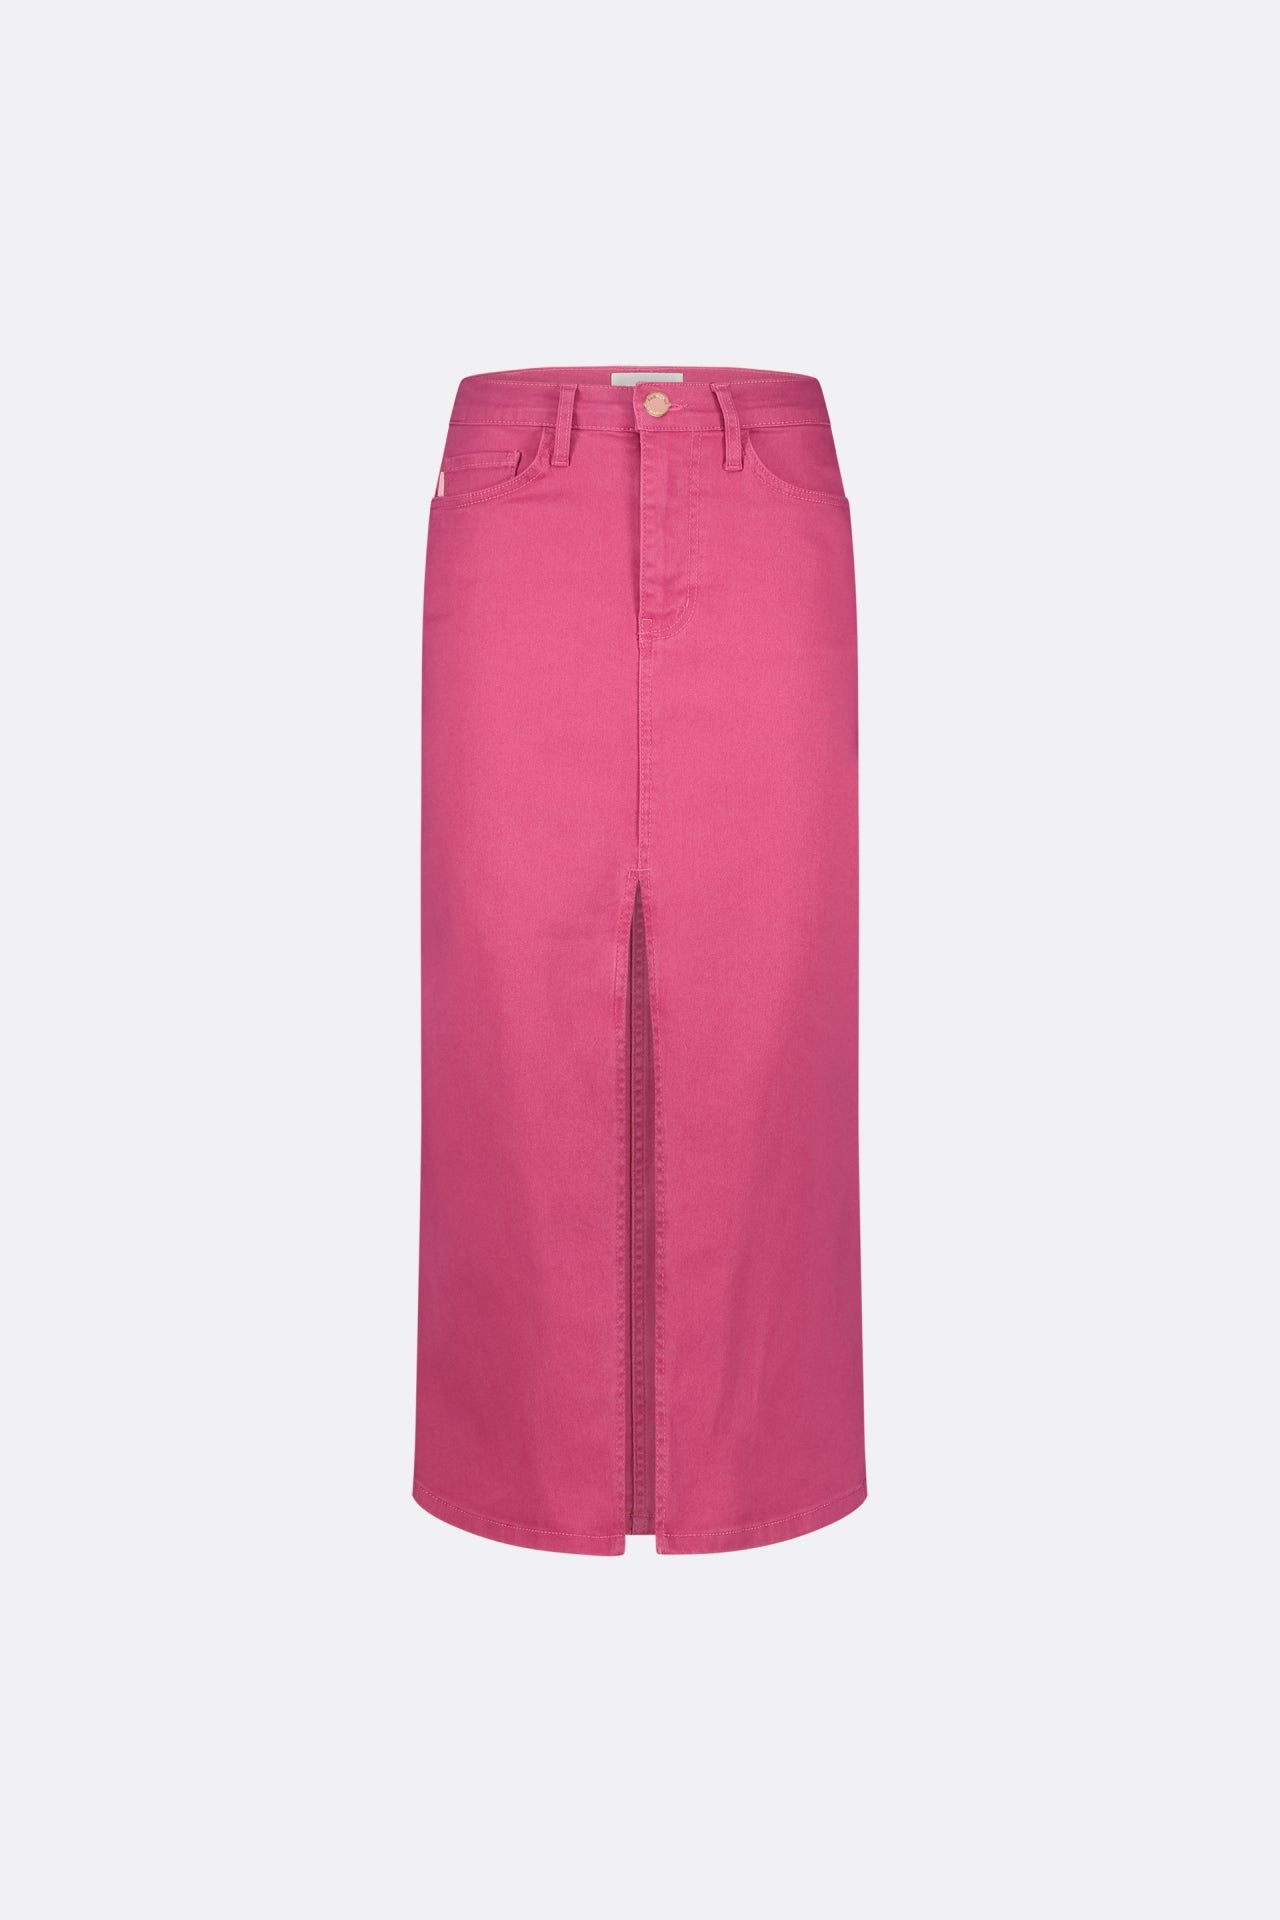 Carlyne Skirt | Hot Pink